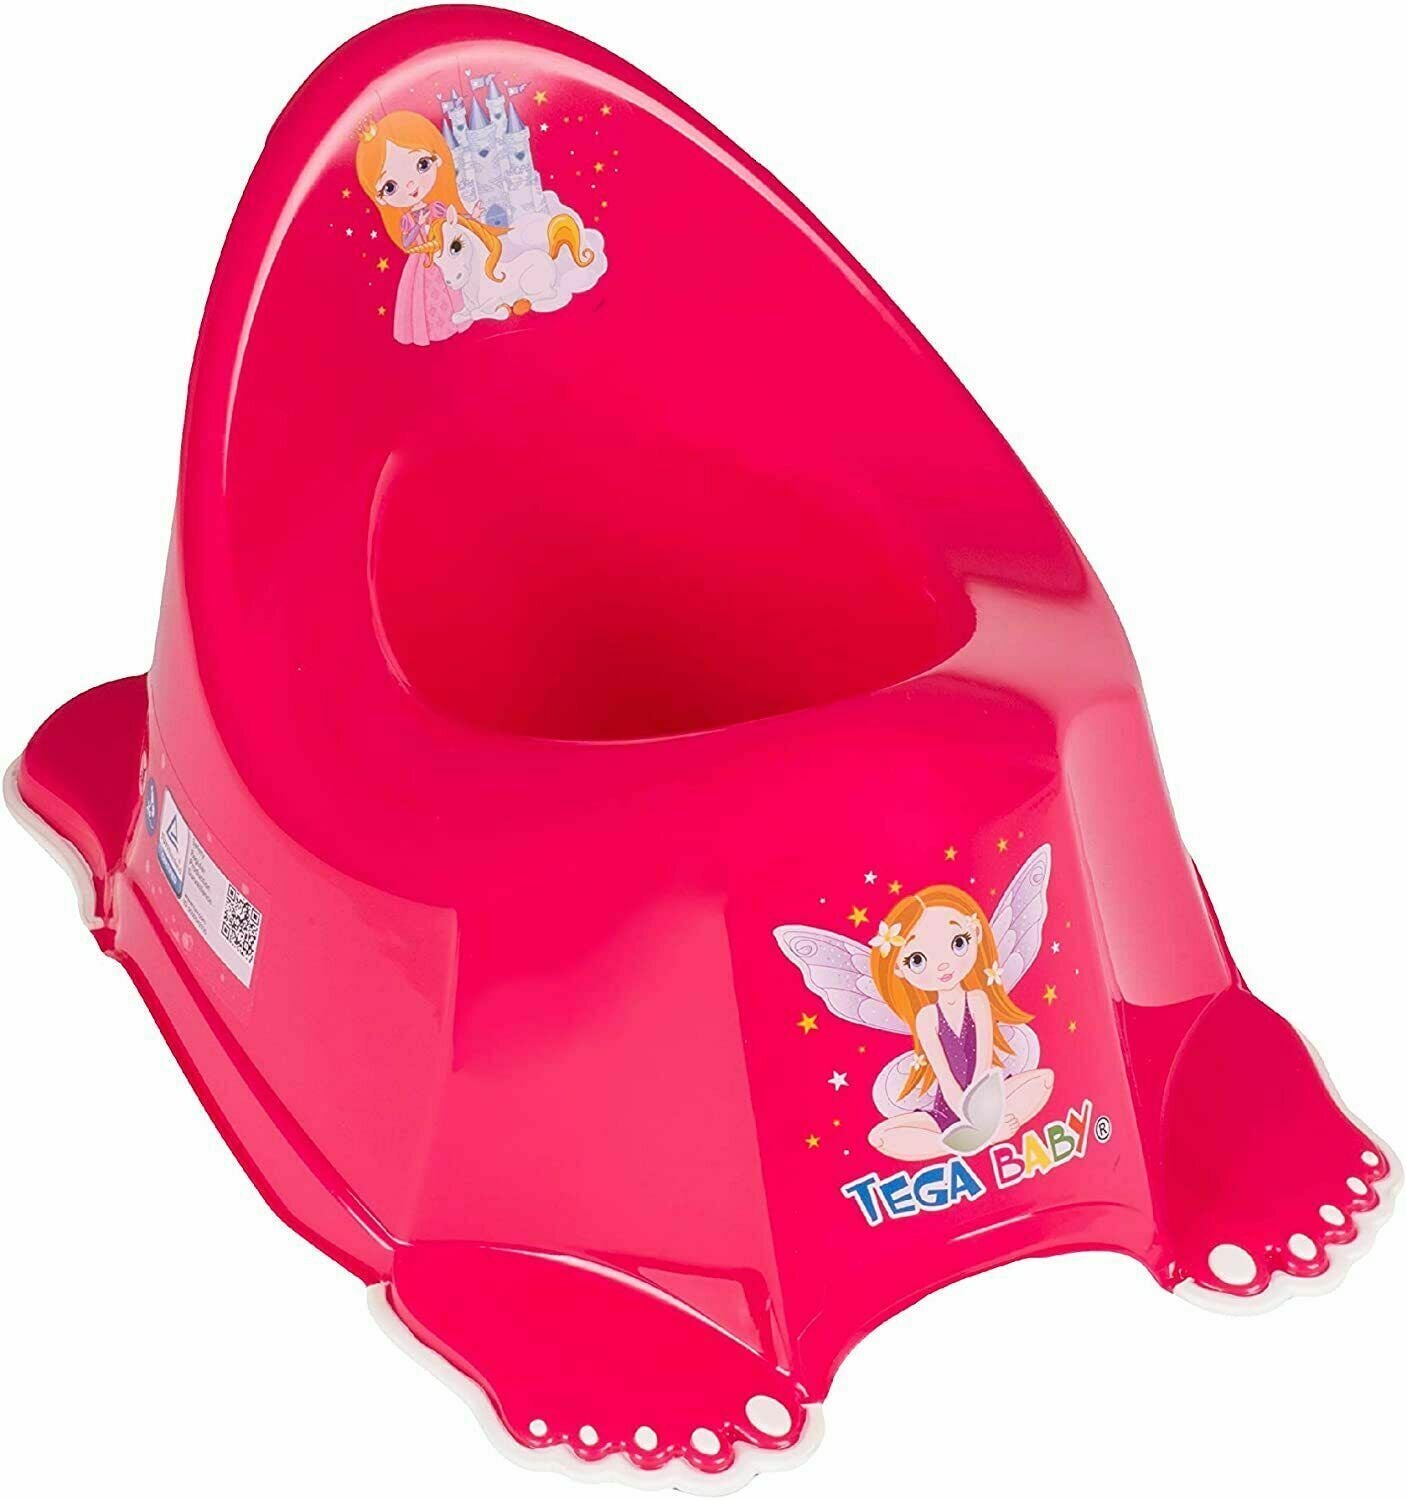 Baby Toilet Potty Chair Toodler Kids Training Seat Safe Non-Slip Princess Pink